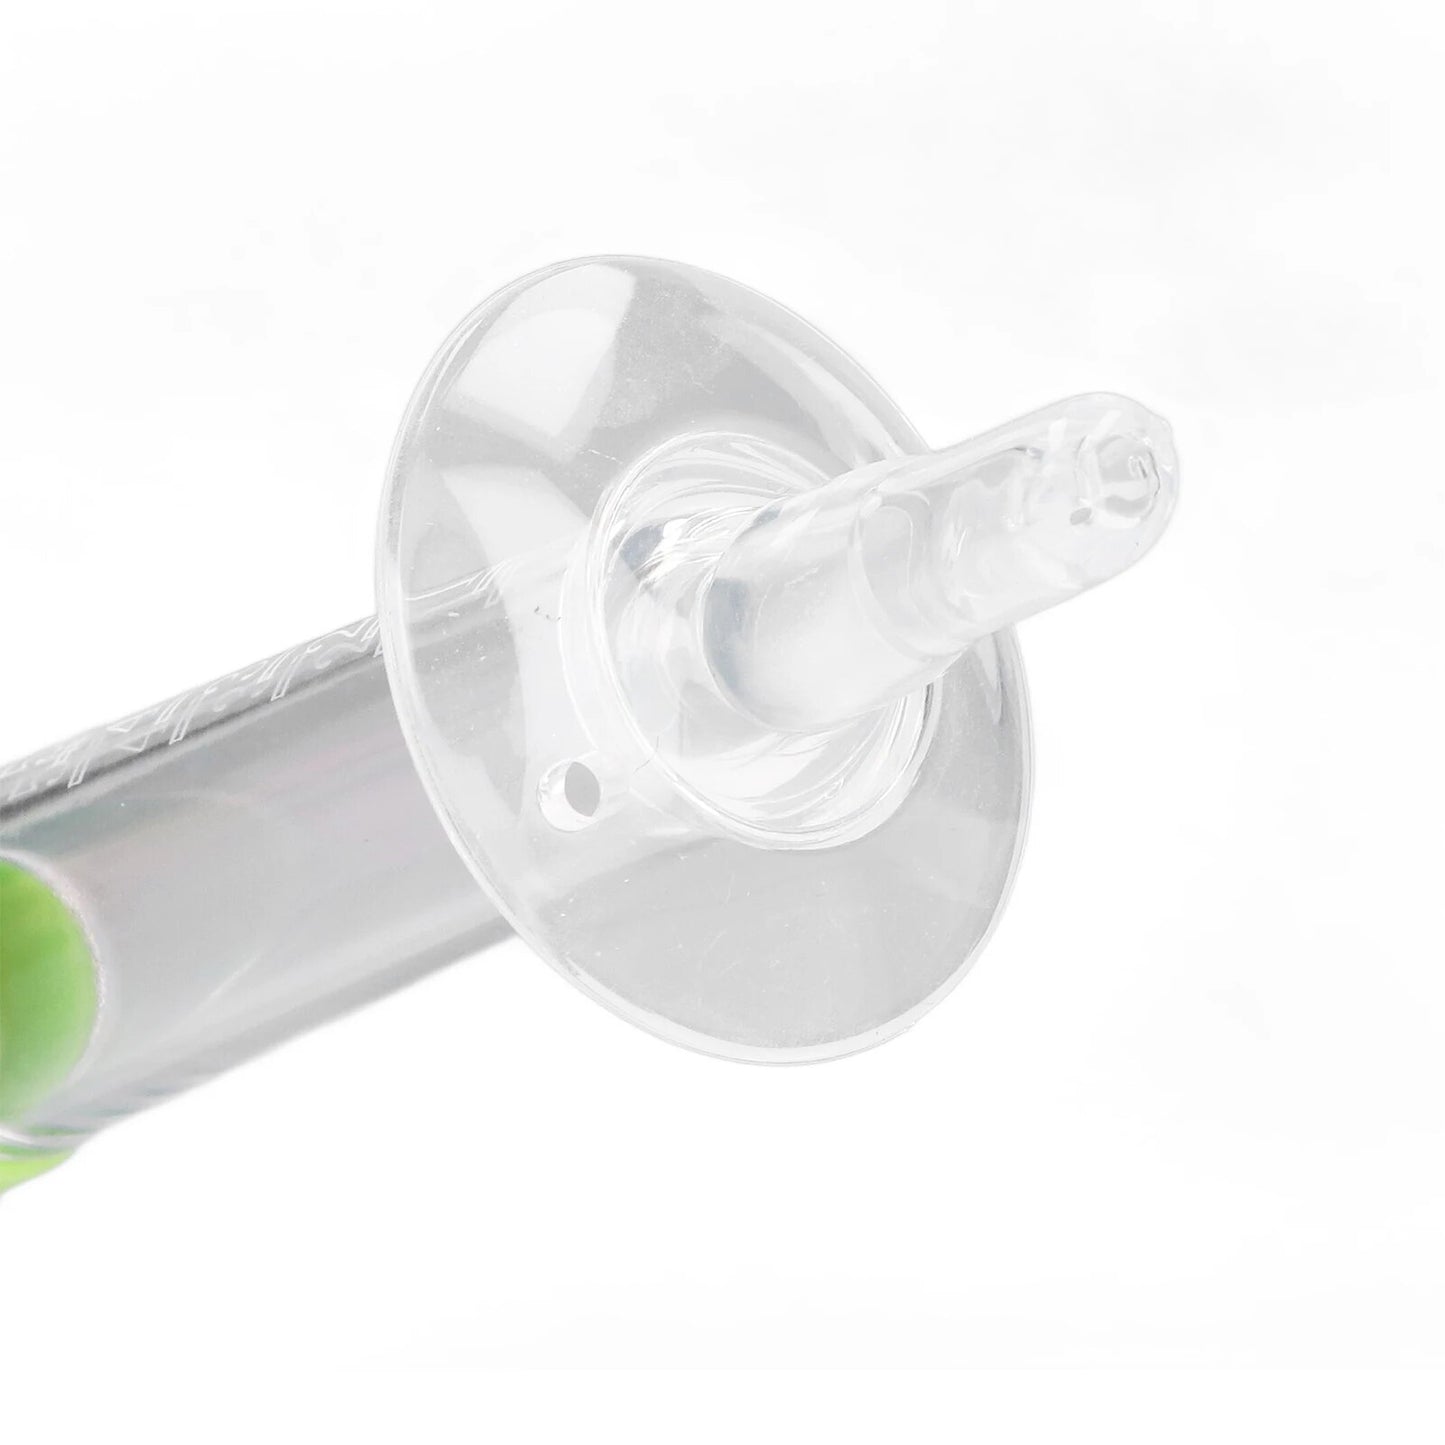 Premium Baby Medicine Dispenser - Gentle Oral Syringe Pacifier, Cute & Safe for Newborns to Toddlers